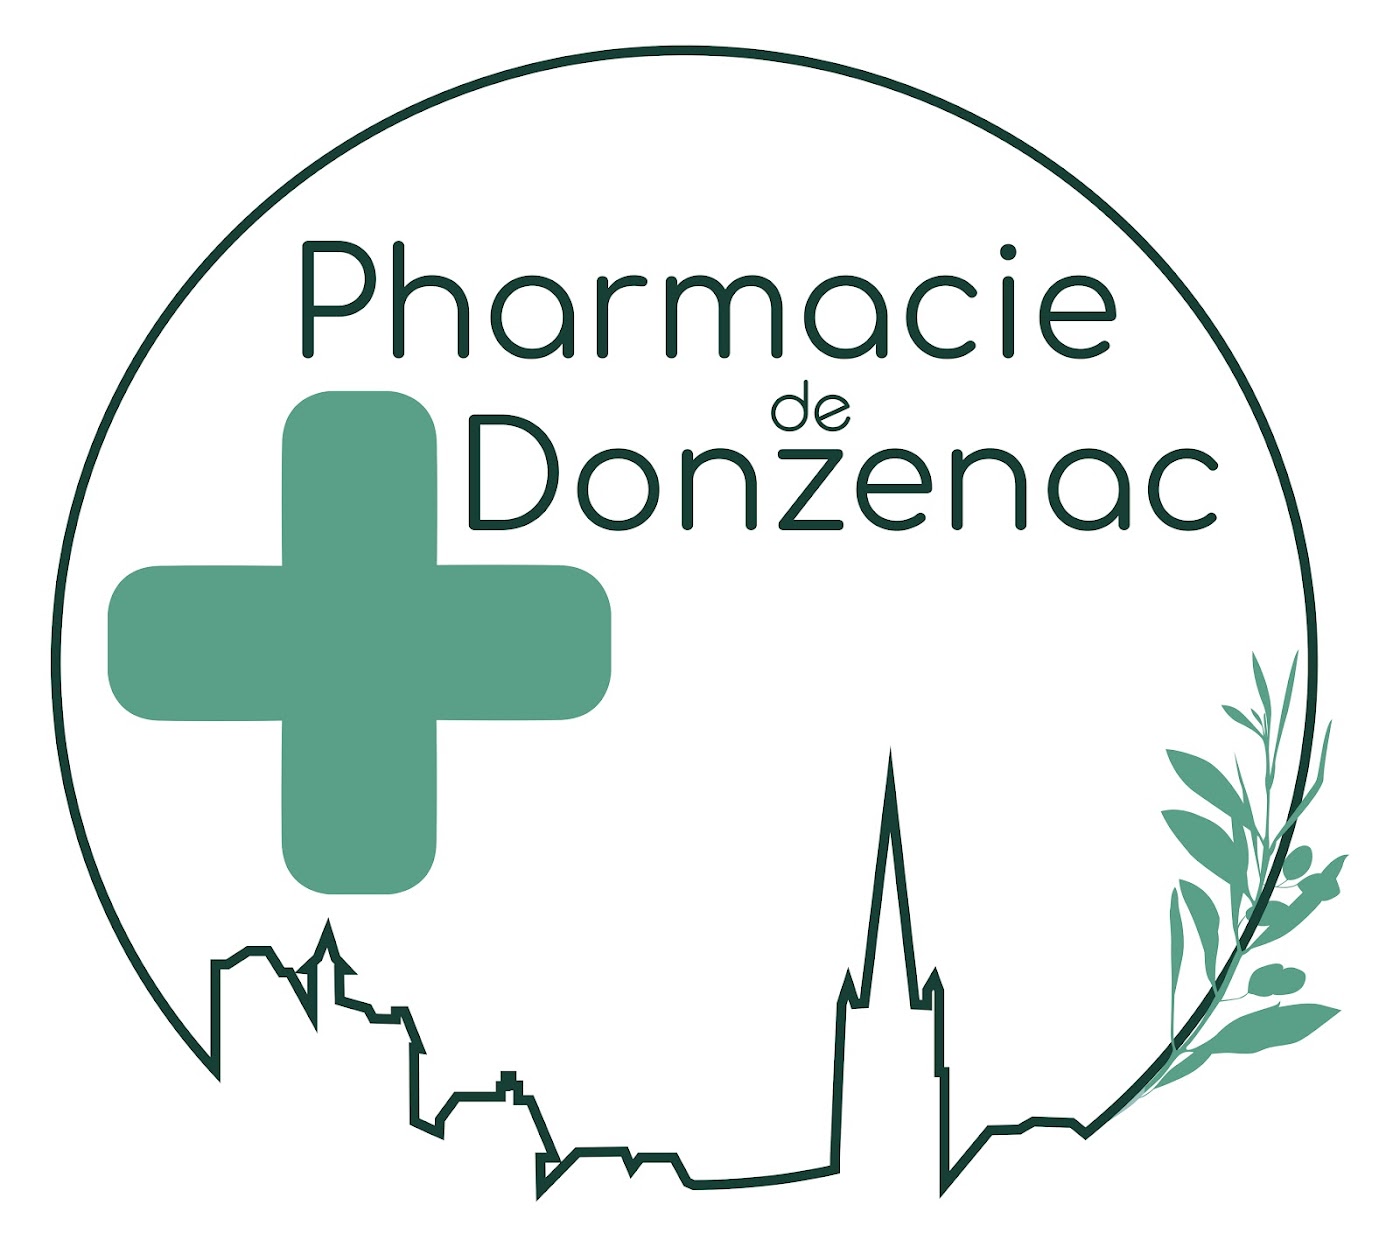 Pharmacie de Donzenac